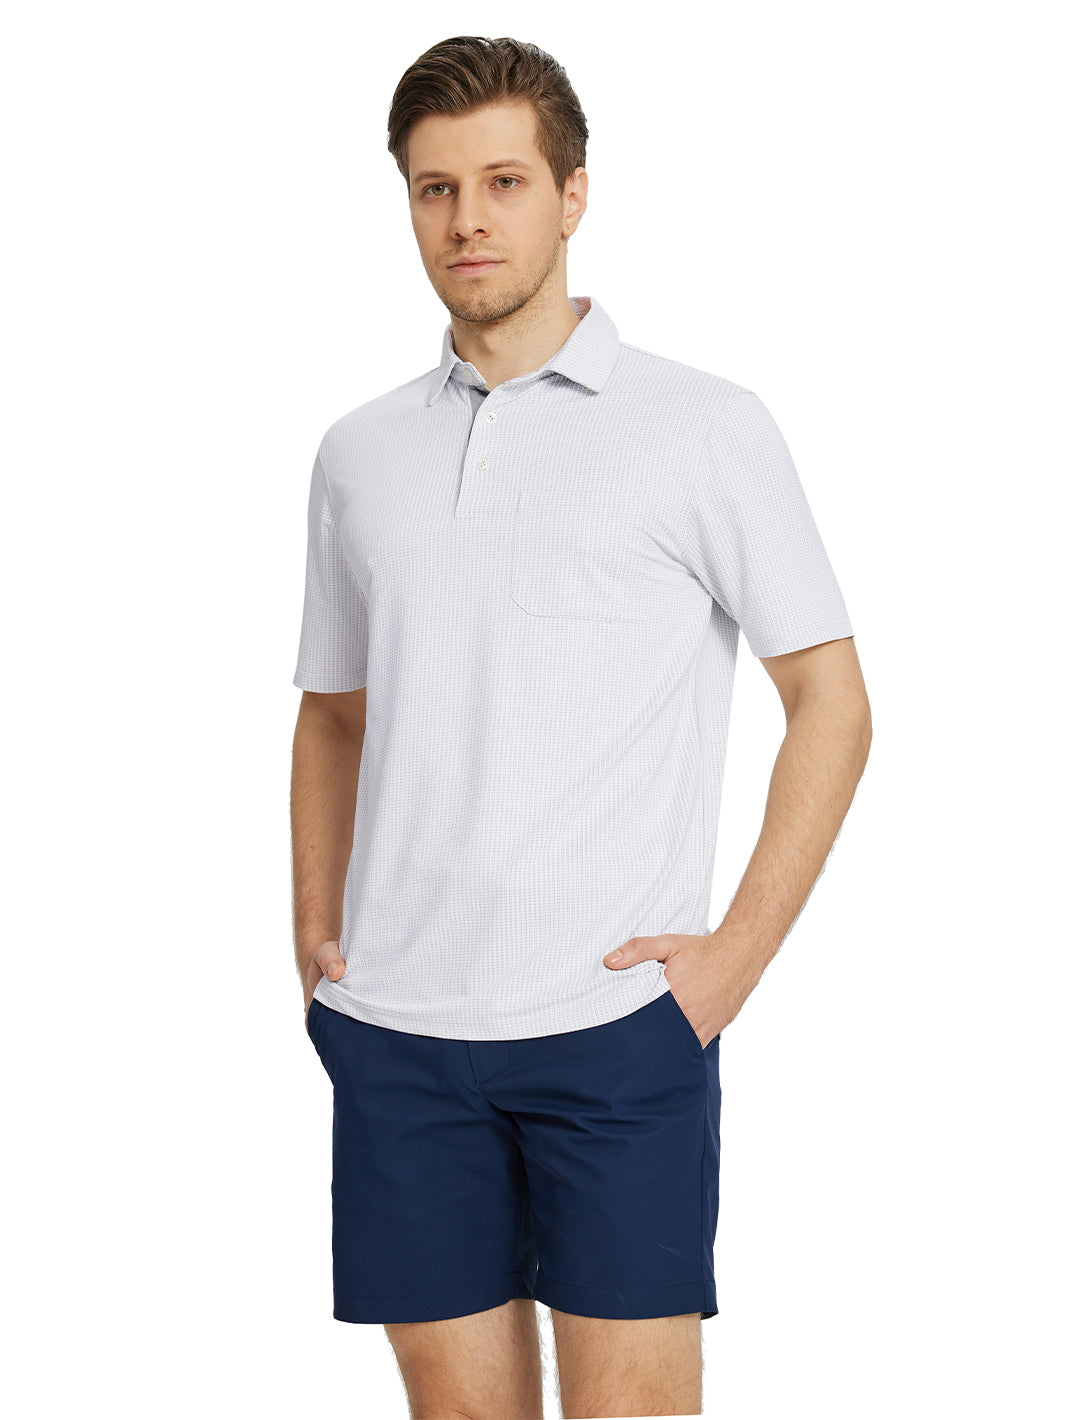 Men's Dry Fit Jacquard Pocket Golf Shirts-Grey